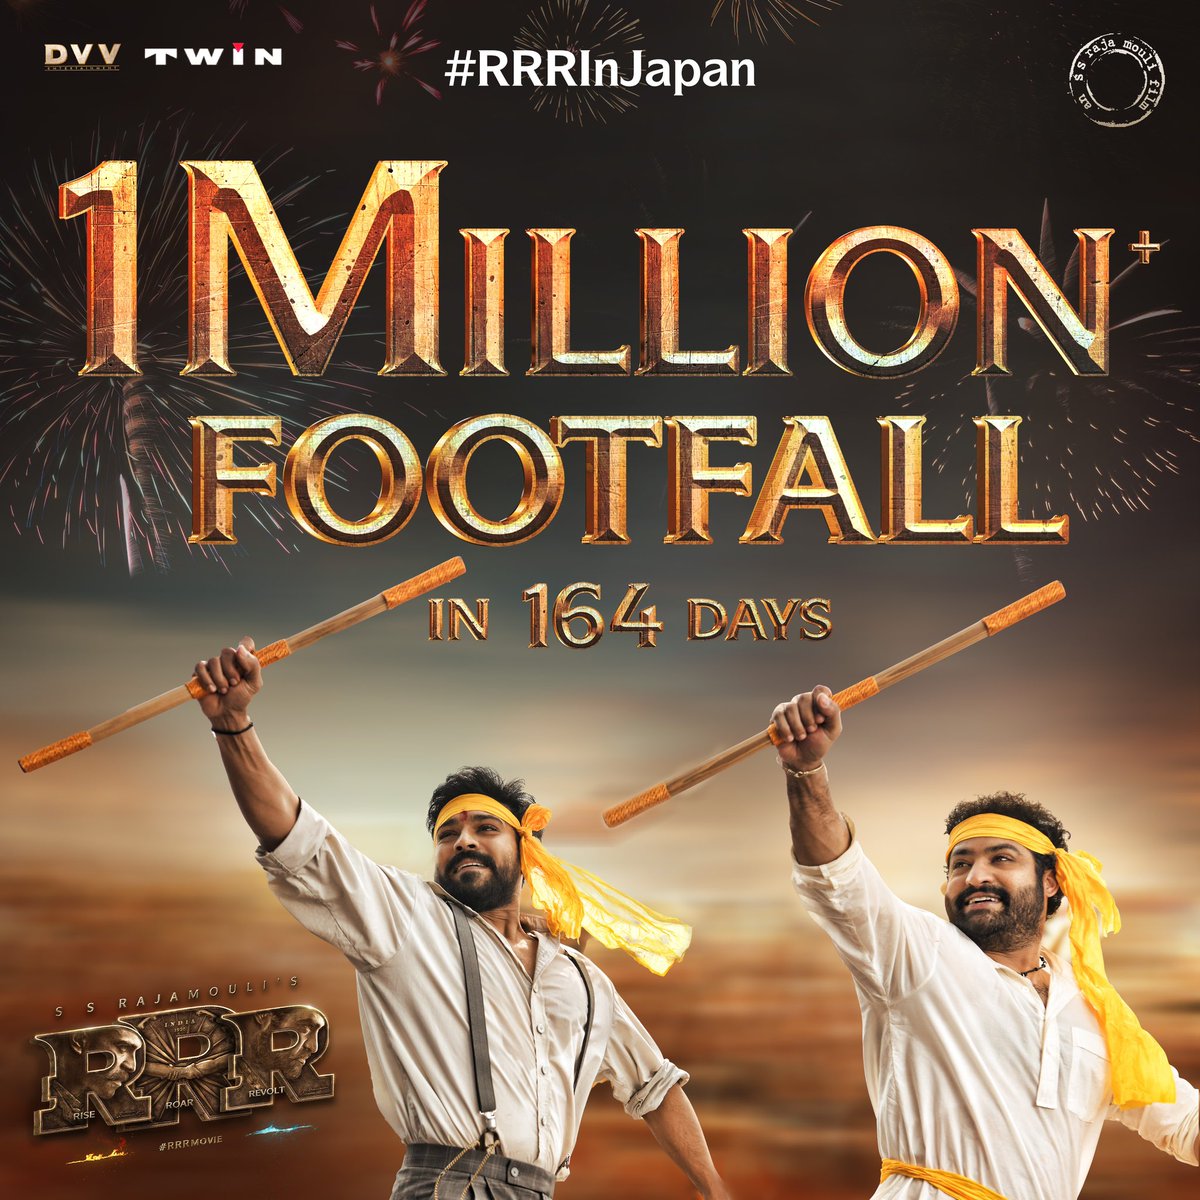 #RRRMovie records 1 Million+ footfall in 164 Days and continues its rocking run ❤️ 🙌🏻 #RRRinJapan.